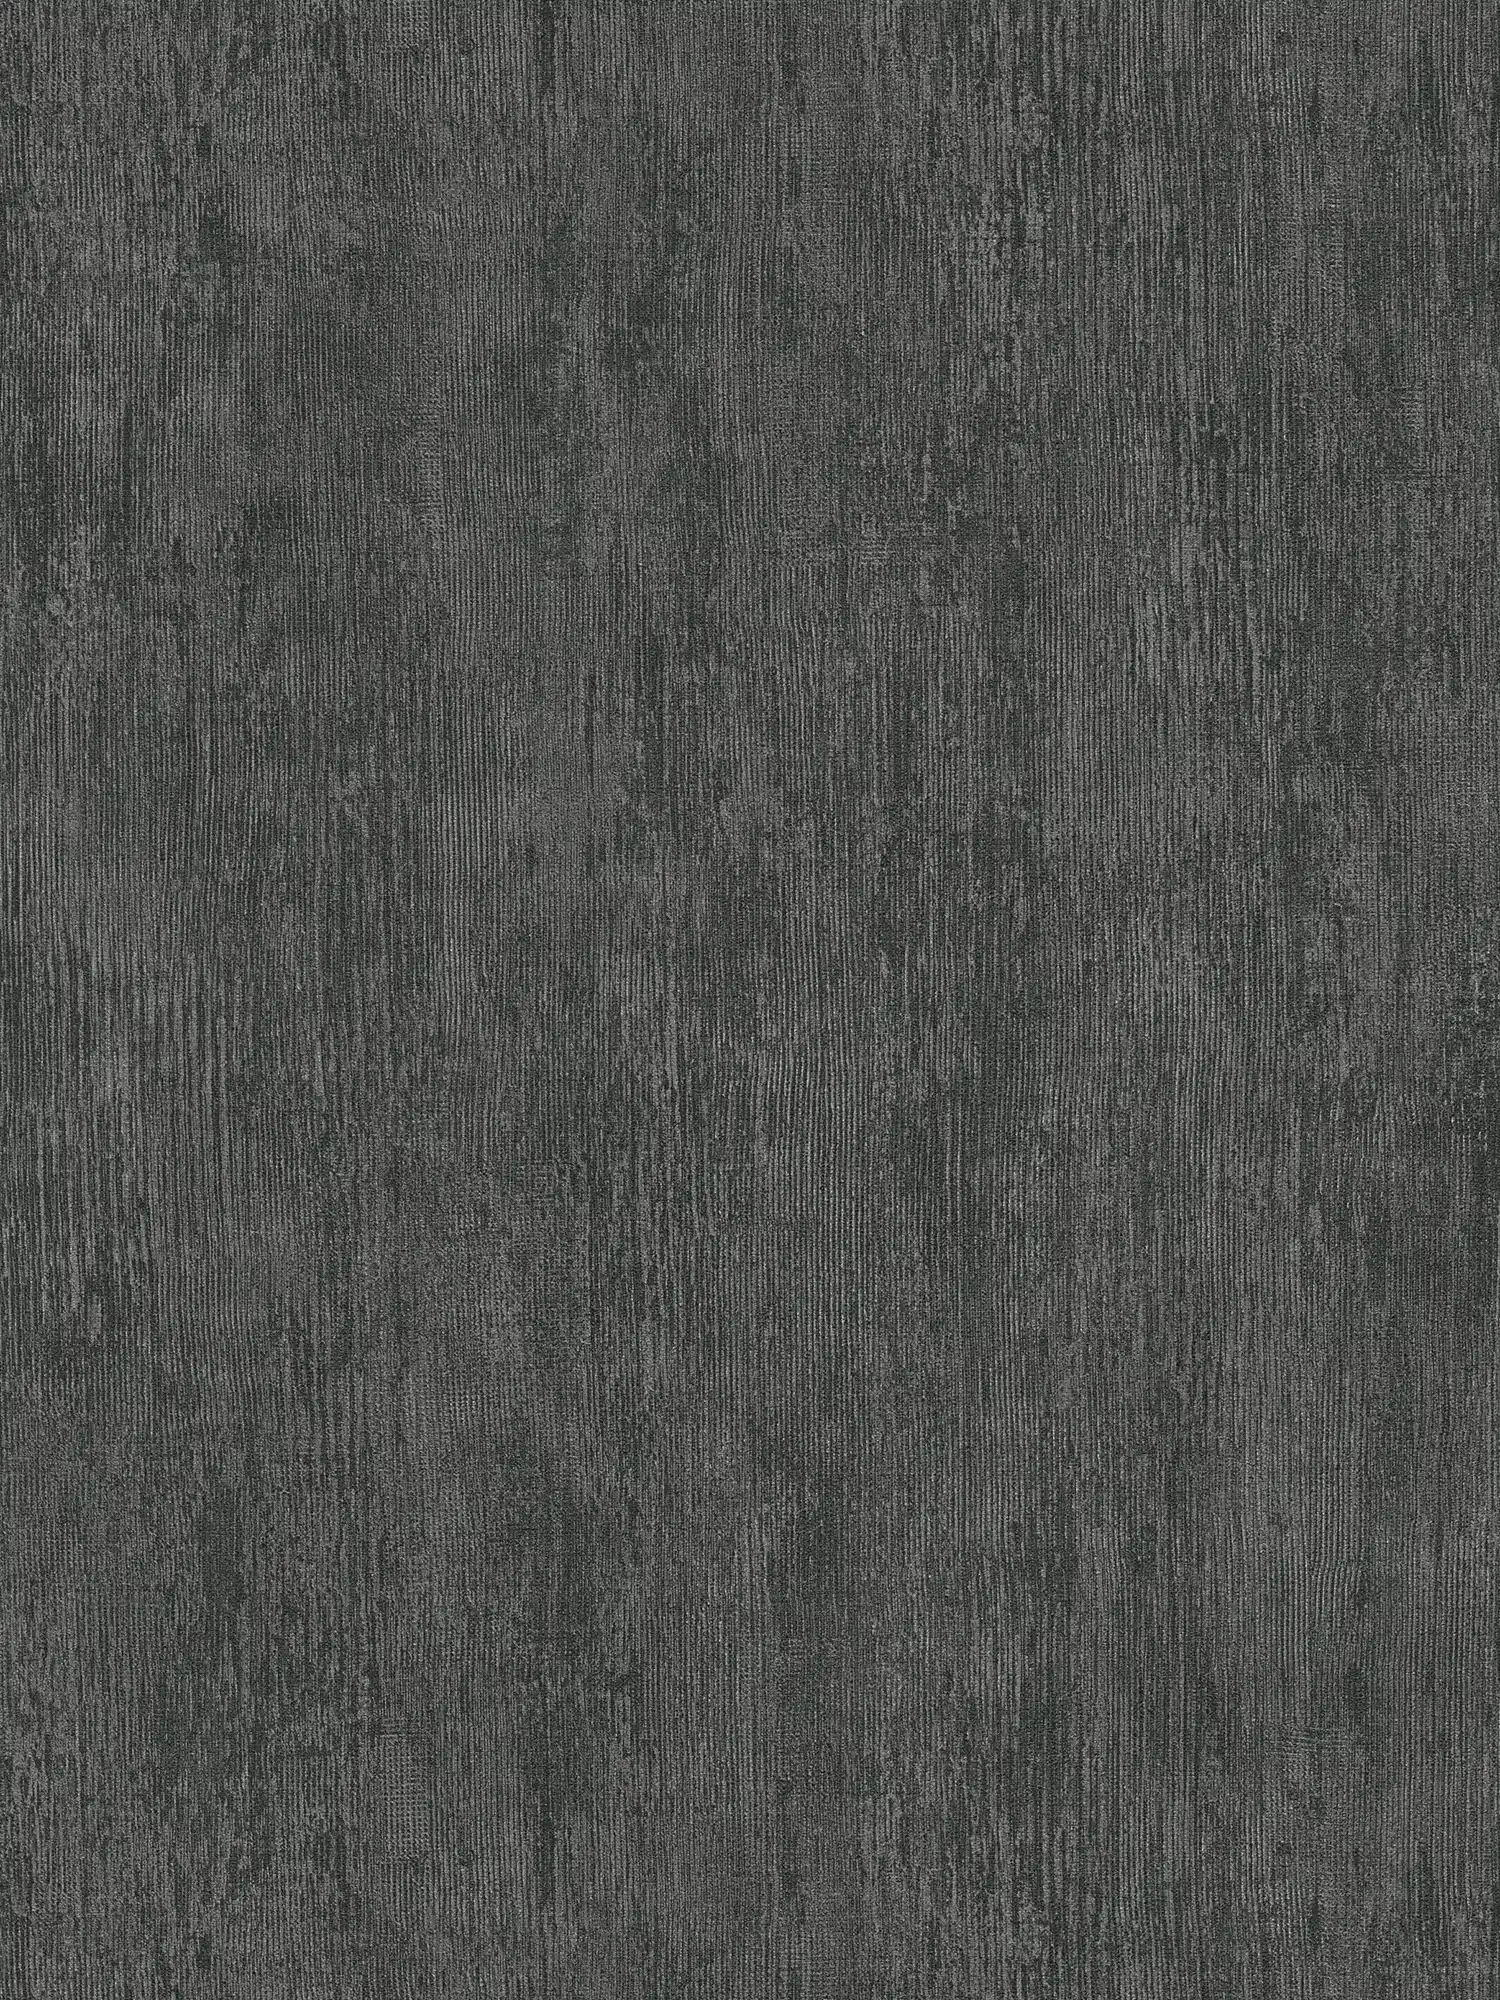         Metall Tapete mit rustikalem Design – Grau, Schwarz
    